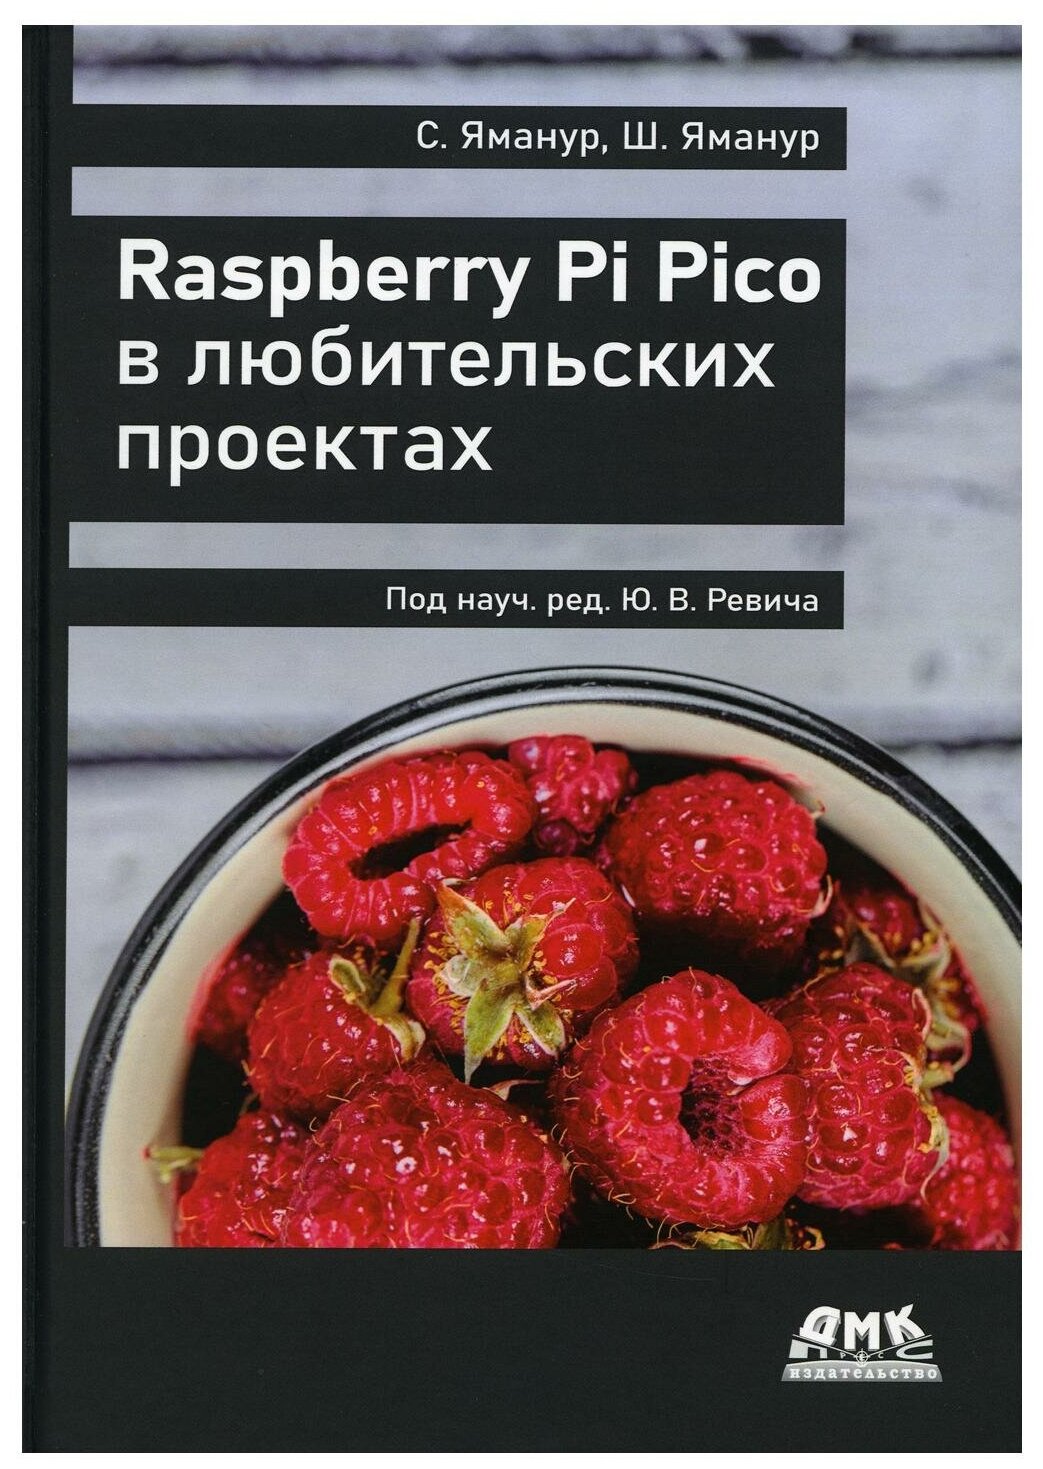 Raspberry Pi Pico в любительских проектах - фото №1